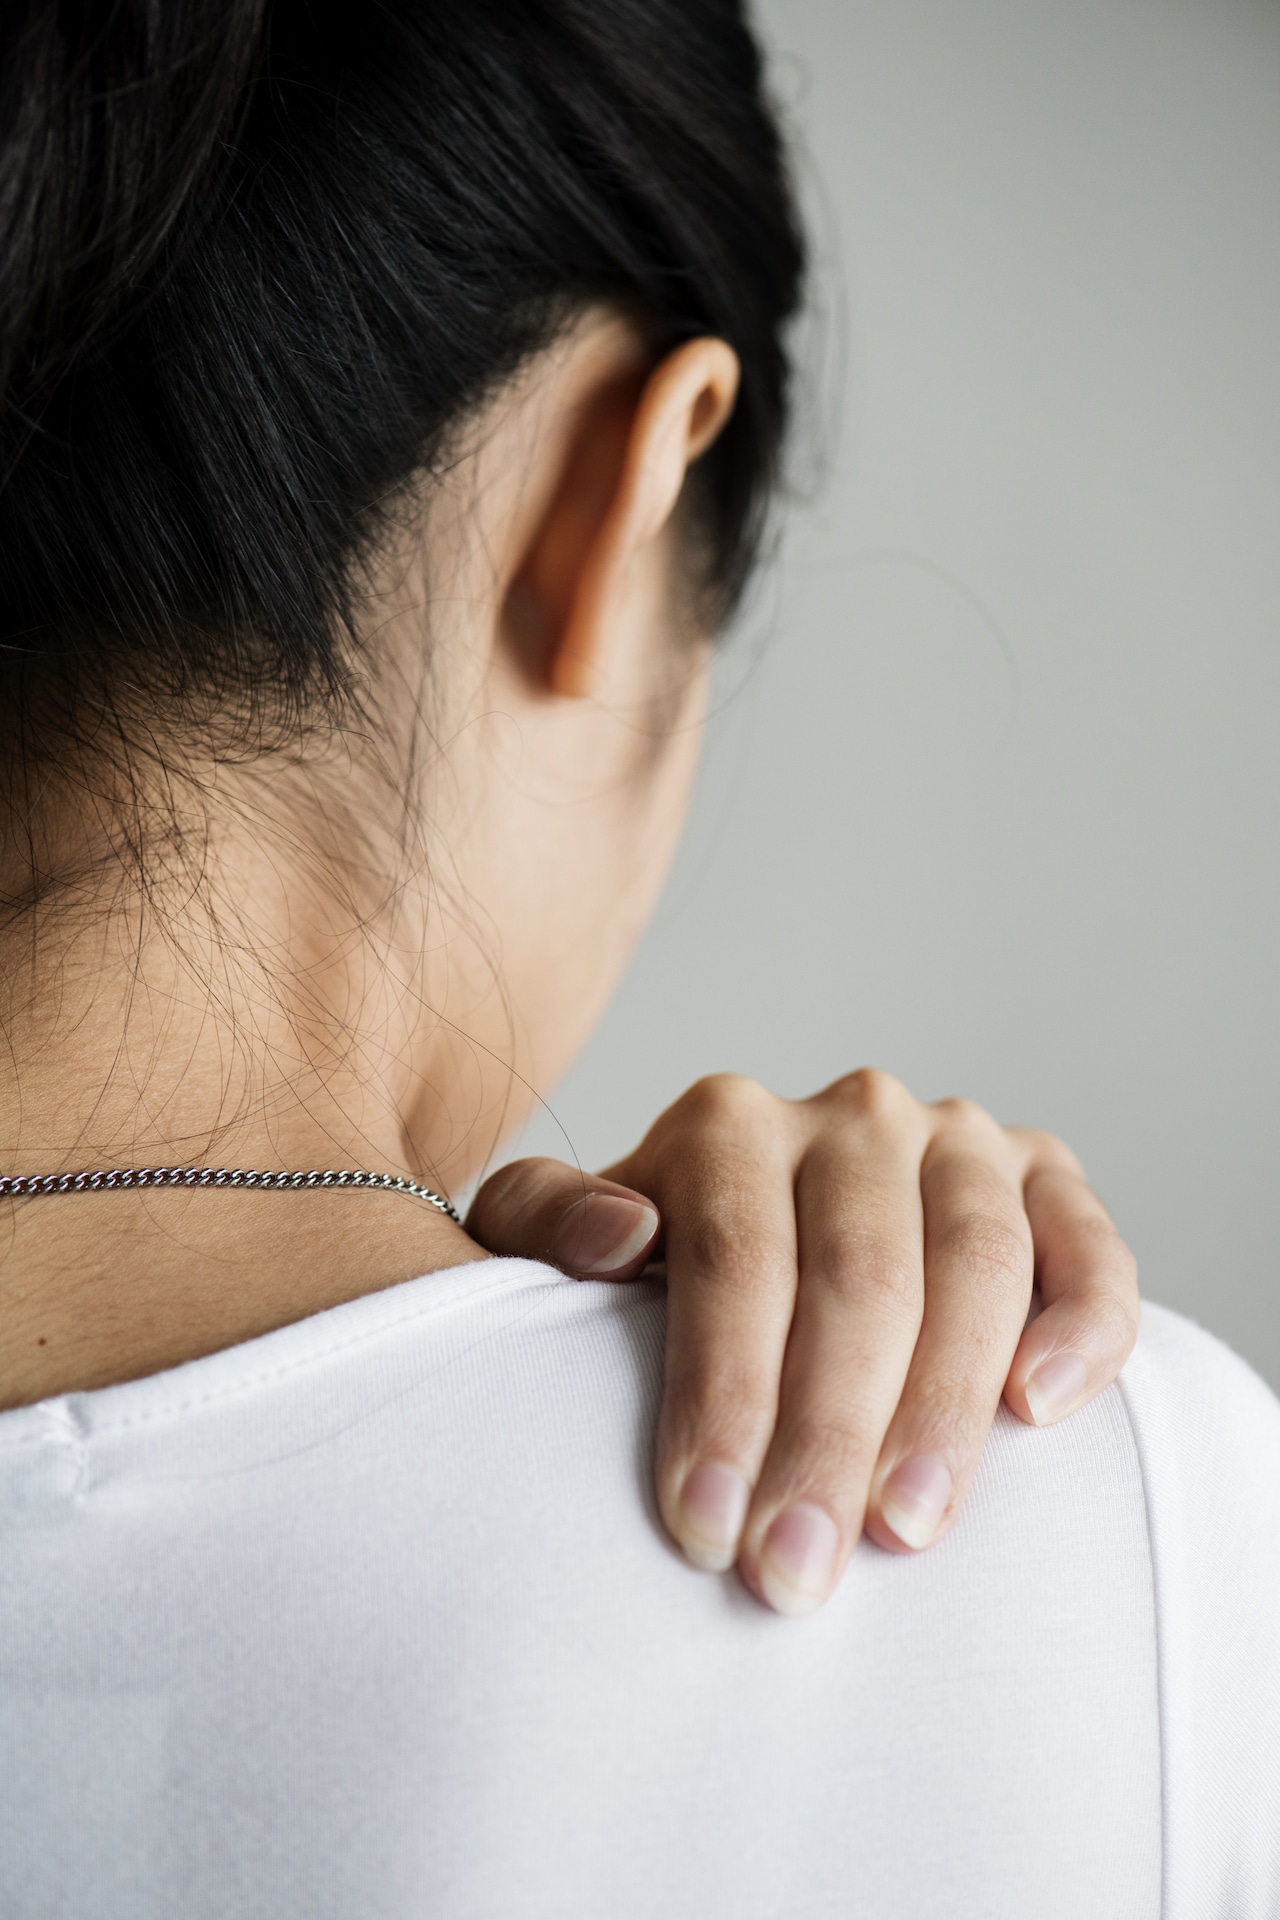 Asian woman suffering back pain